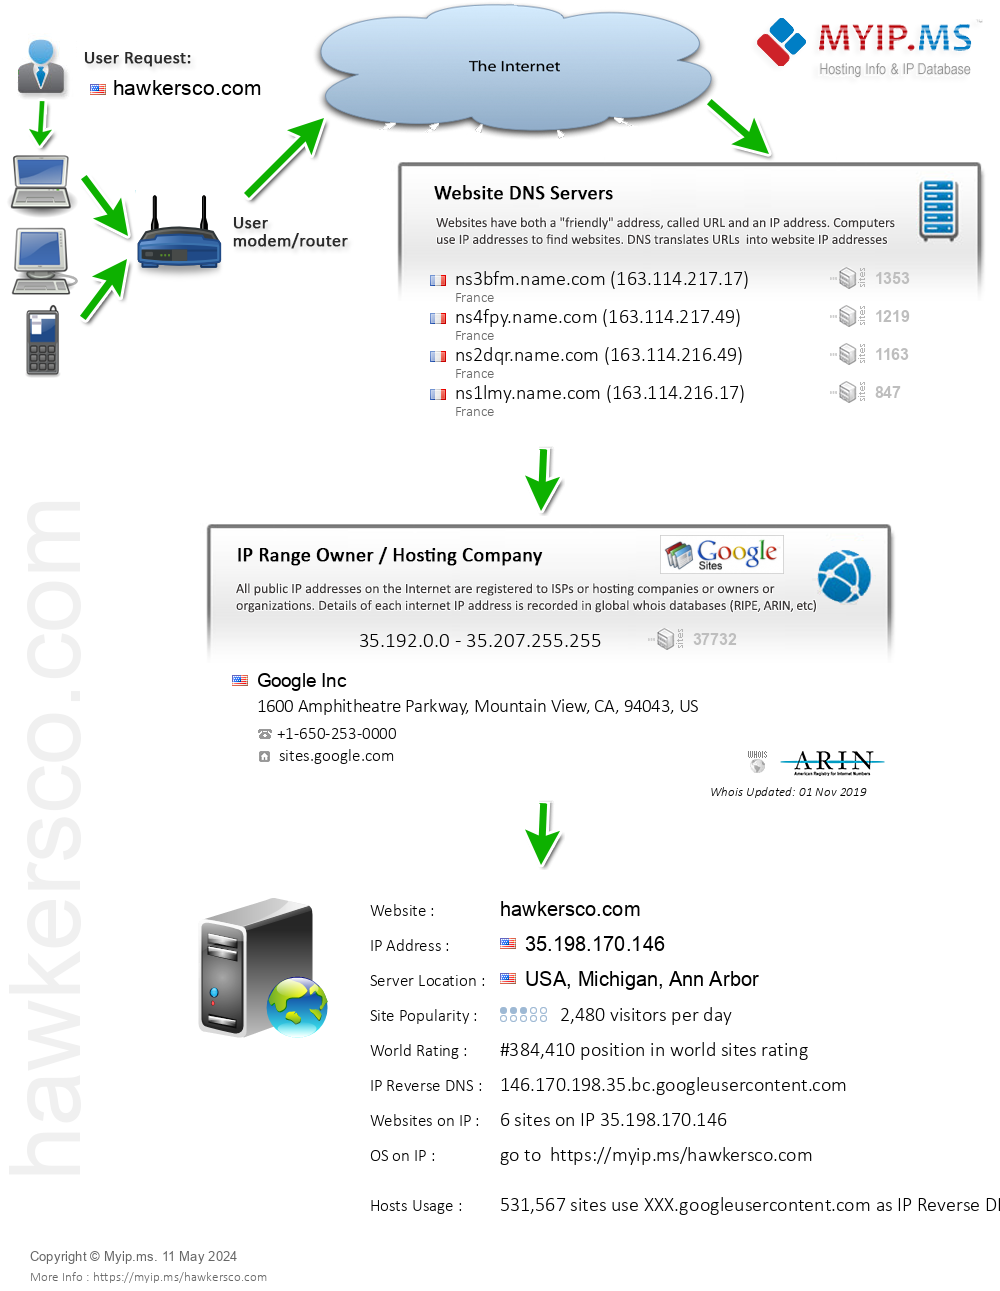 Hawkersco.com - Website Hosting Visual IP Diagram